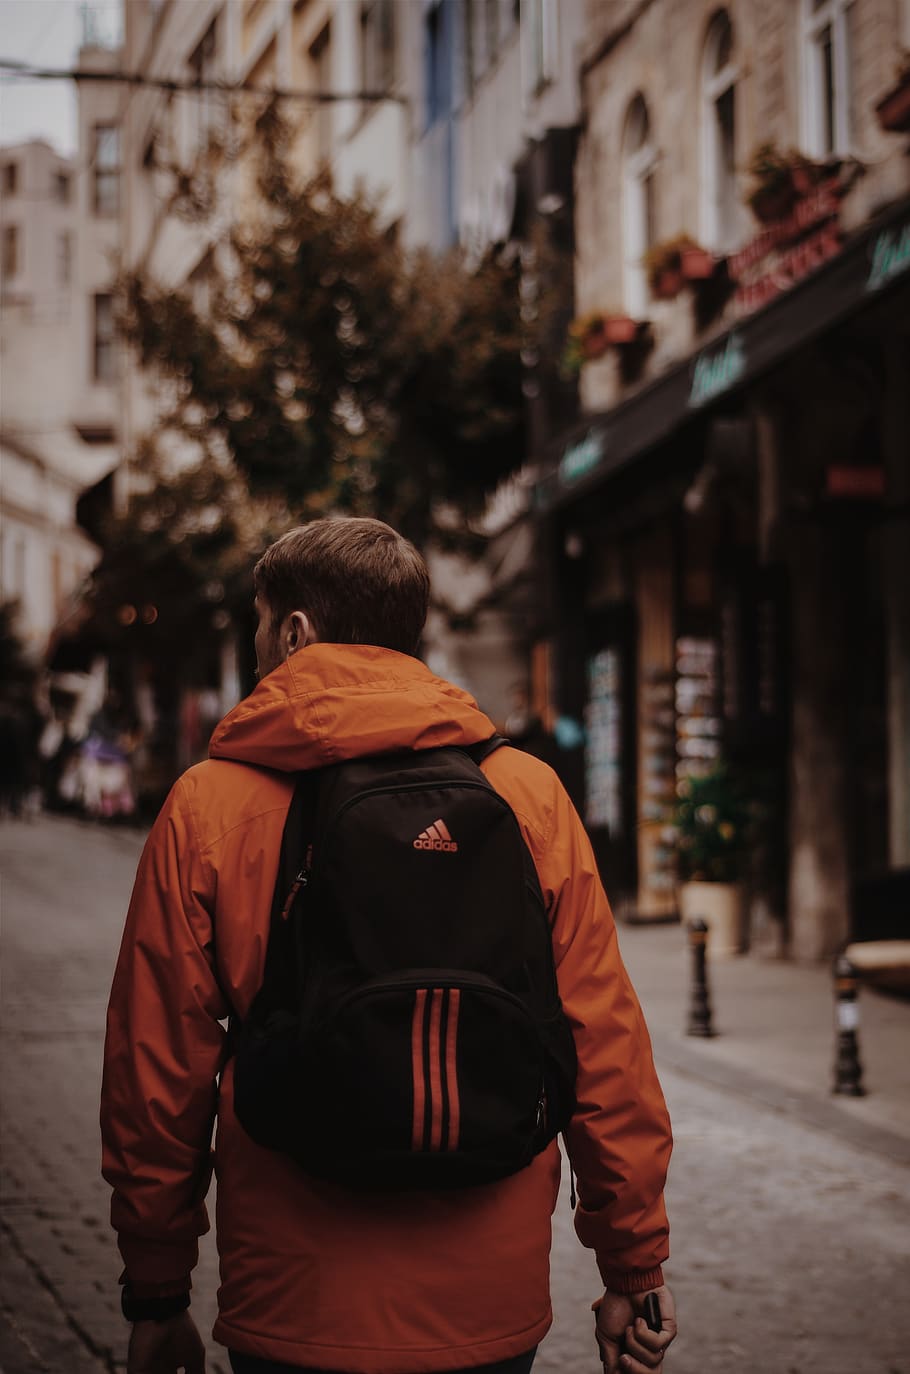 Man in Orange Jacket With Black Adidas Backpack Walks in Middle of Road